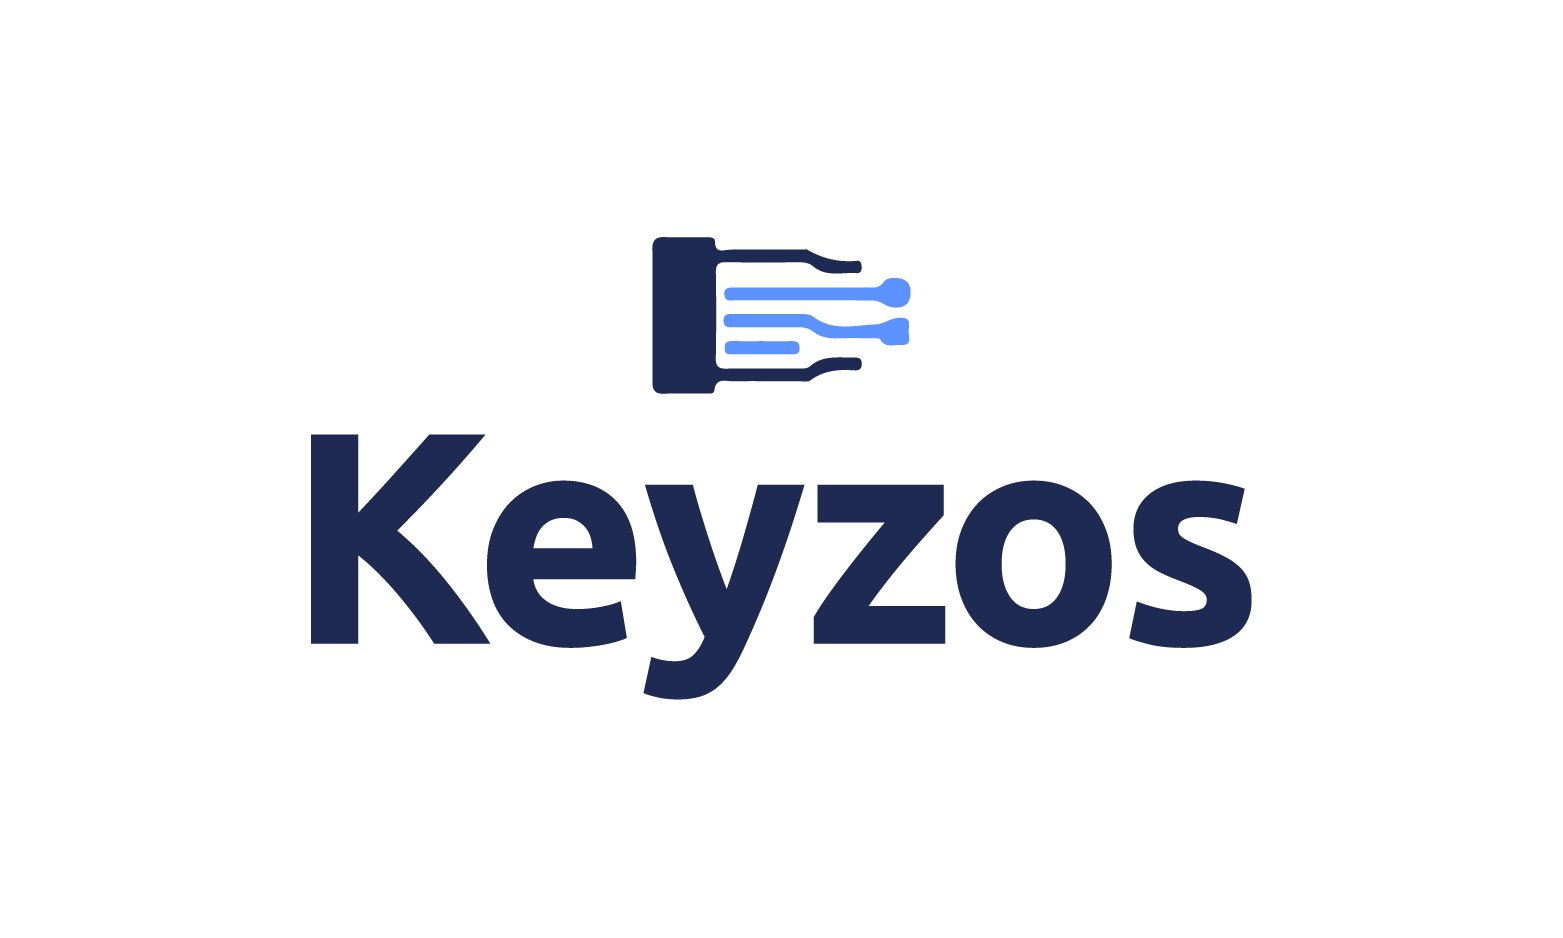 Keyzos.com - Creative brandable domain for sale